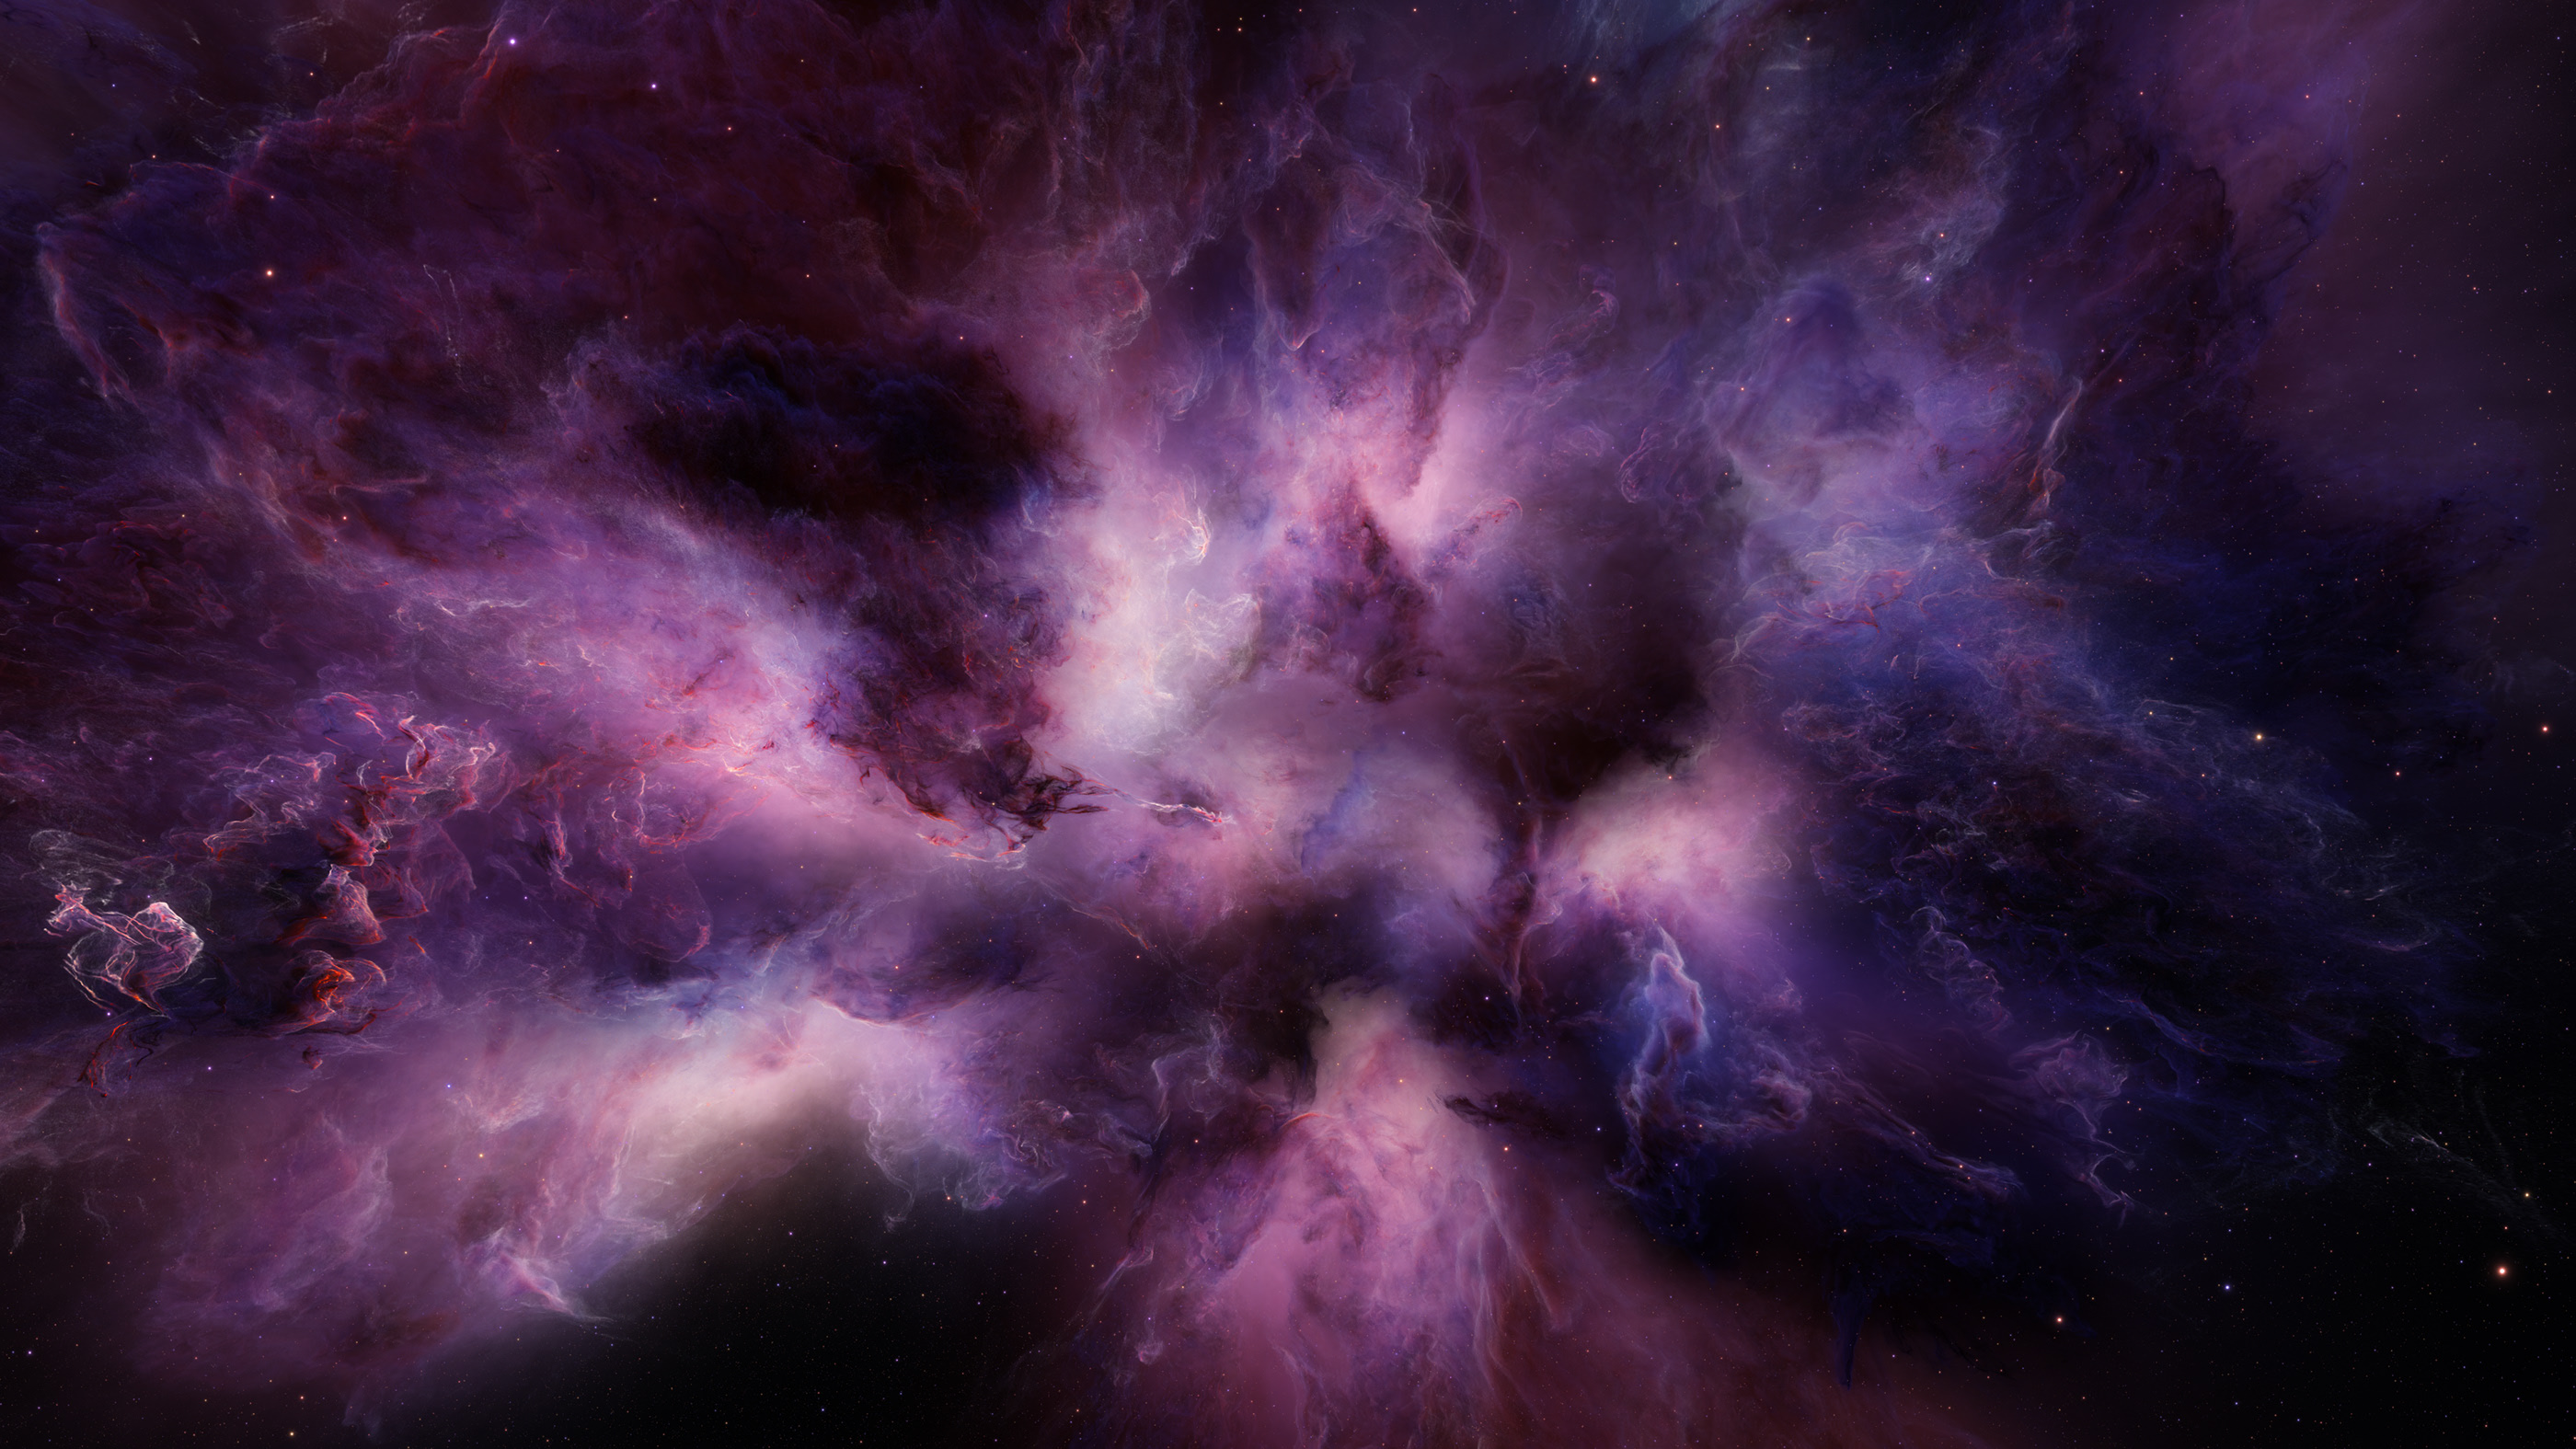 General 2800x1575 digital art space art stars nebula Salmonick Atelier